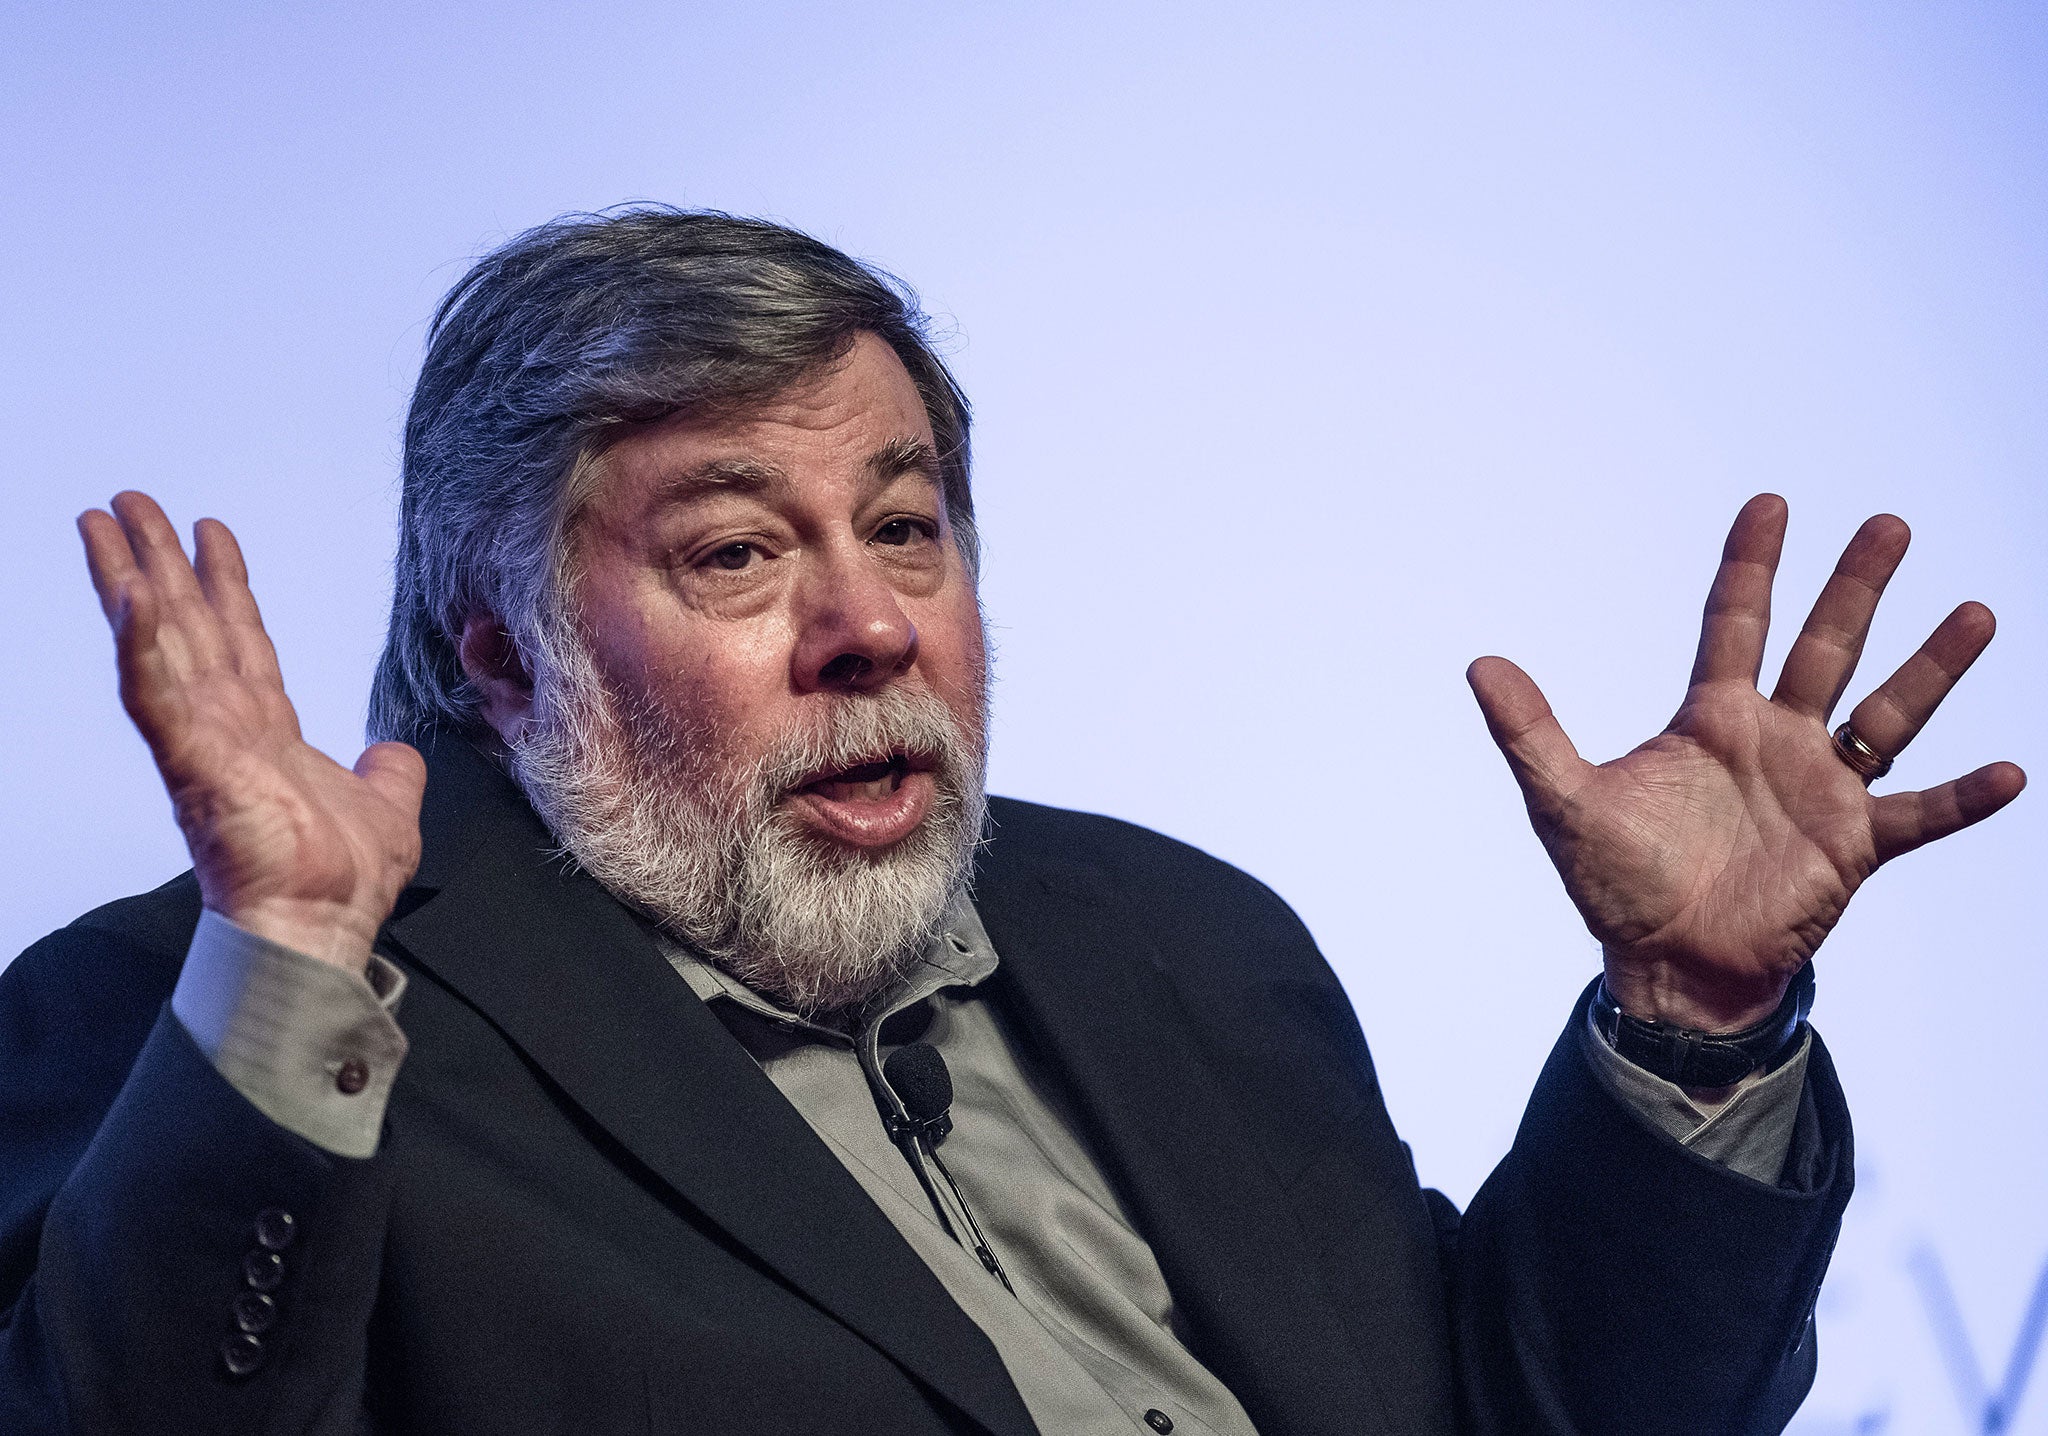 Apple co-founder Steve Wozniak has mixed views on the upcoming Steve Jobs film